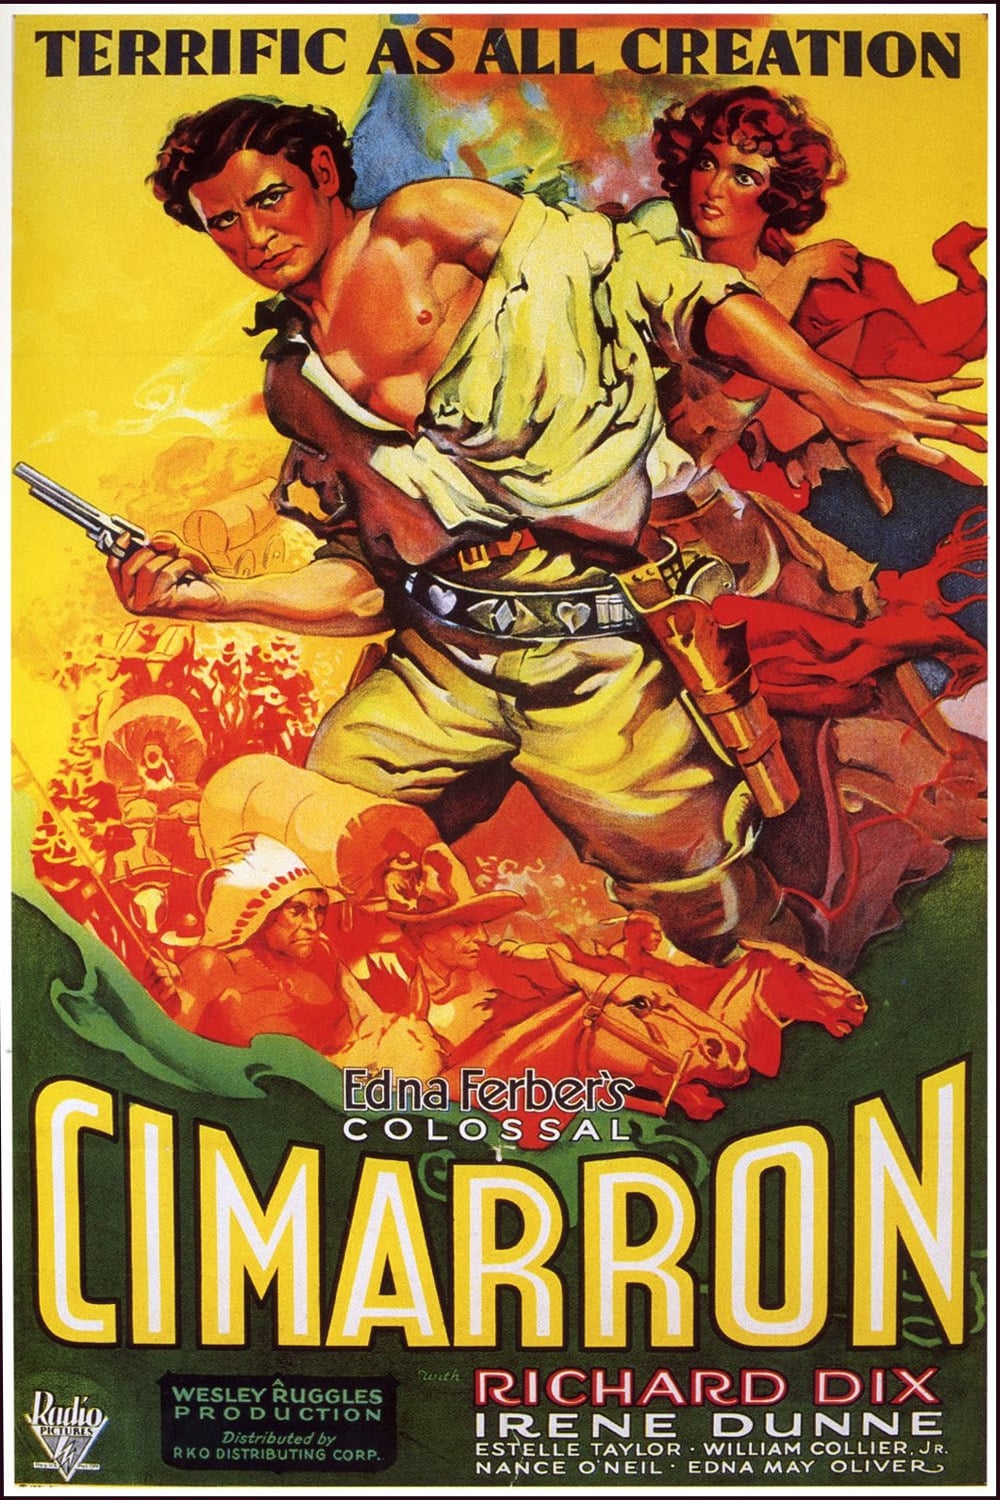 Cimarron poster